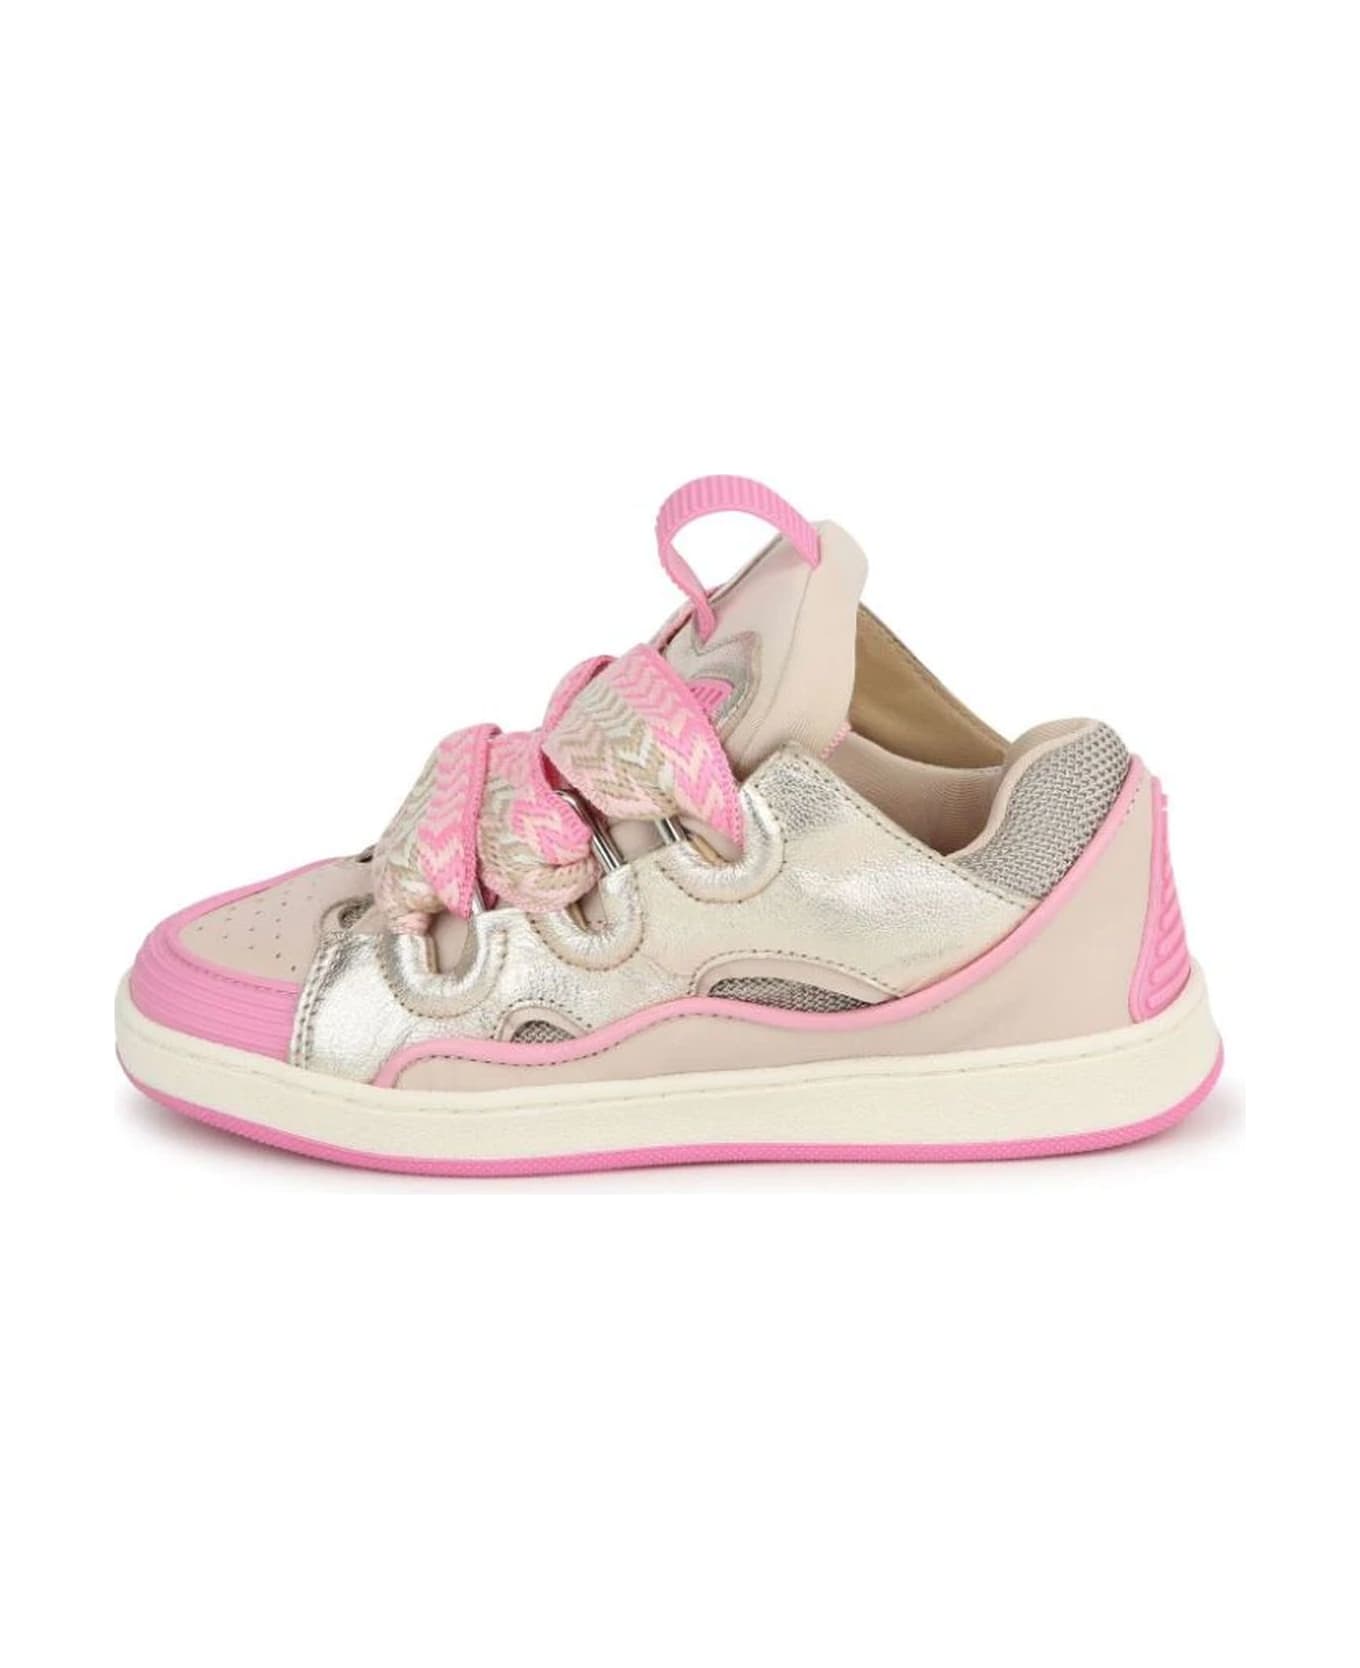 Lanvin Sneakers Pink - Pink